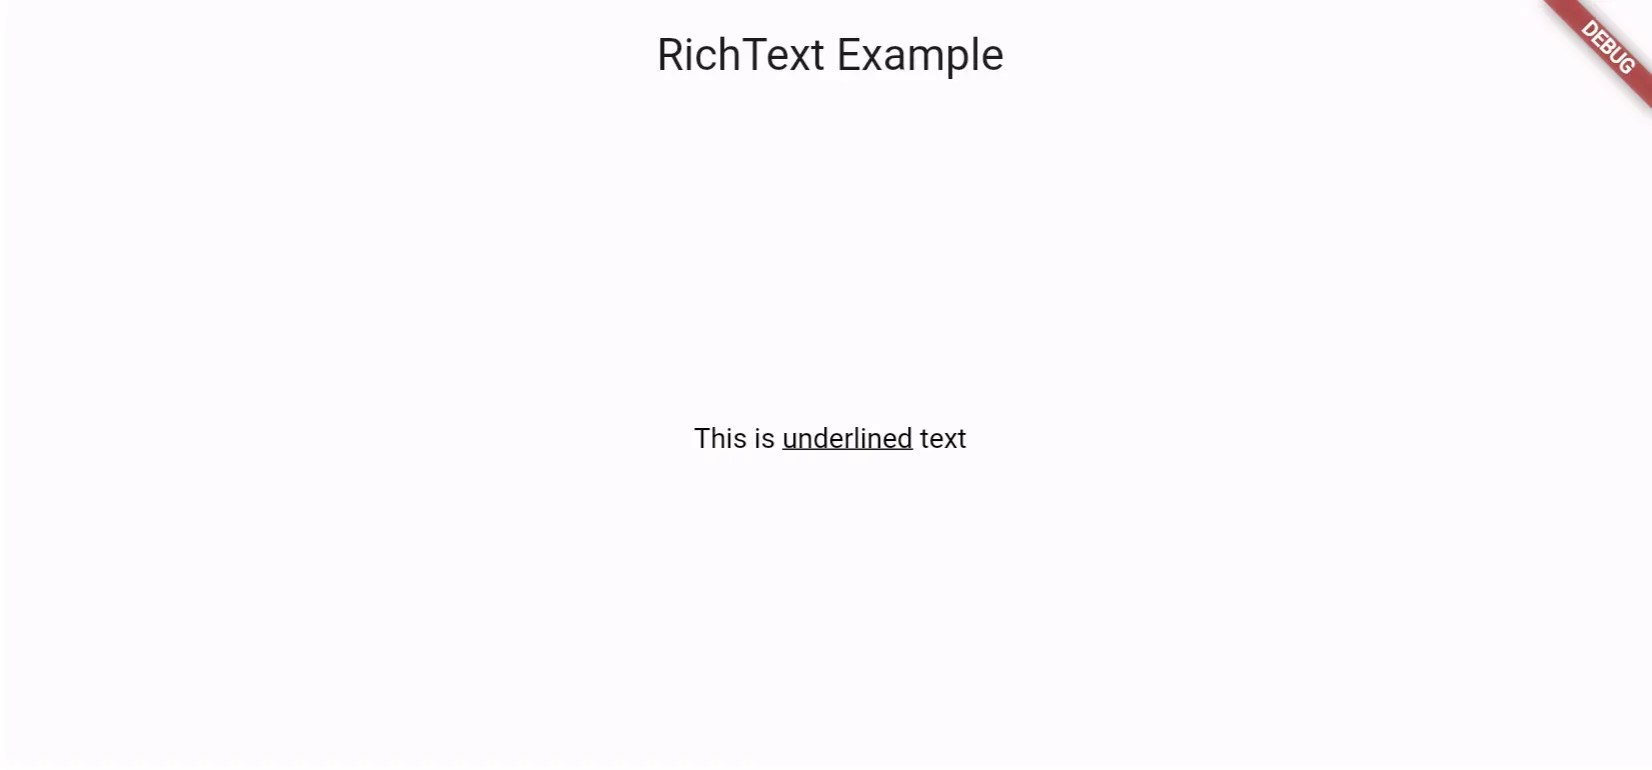 Adding Underline with TextDecoration